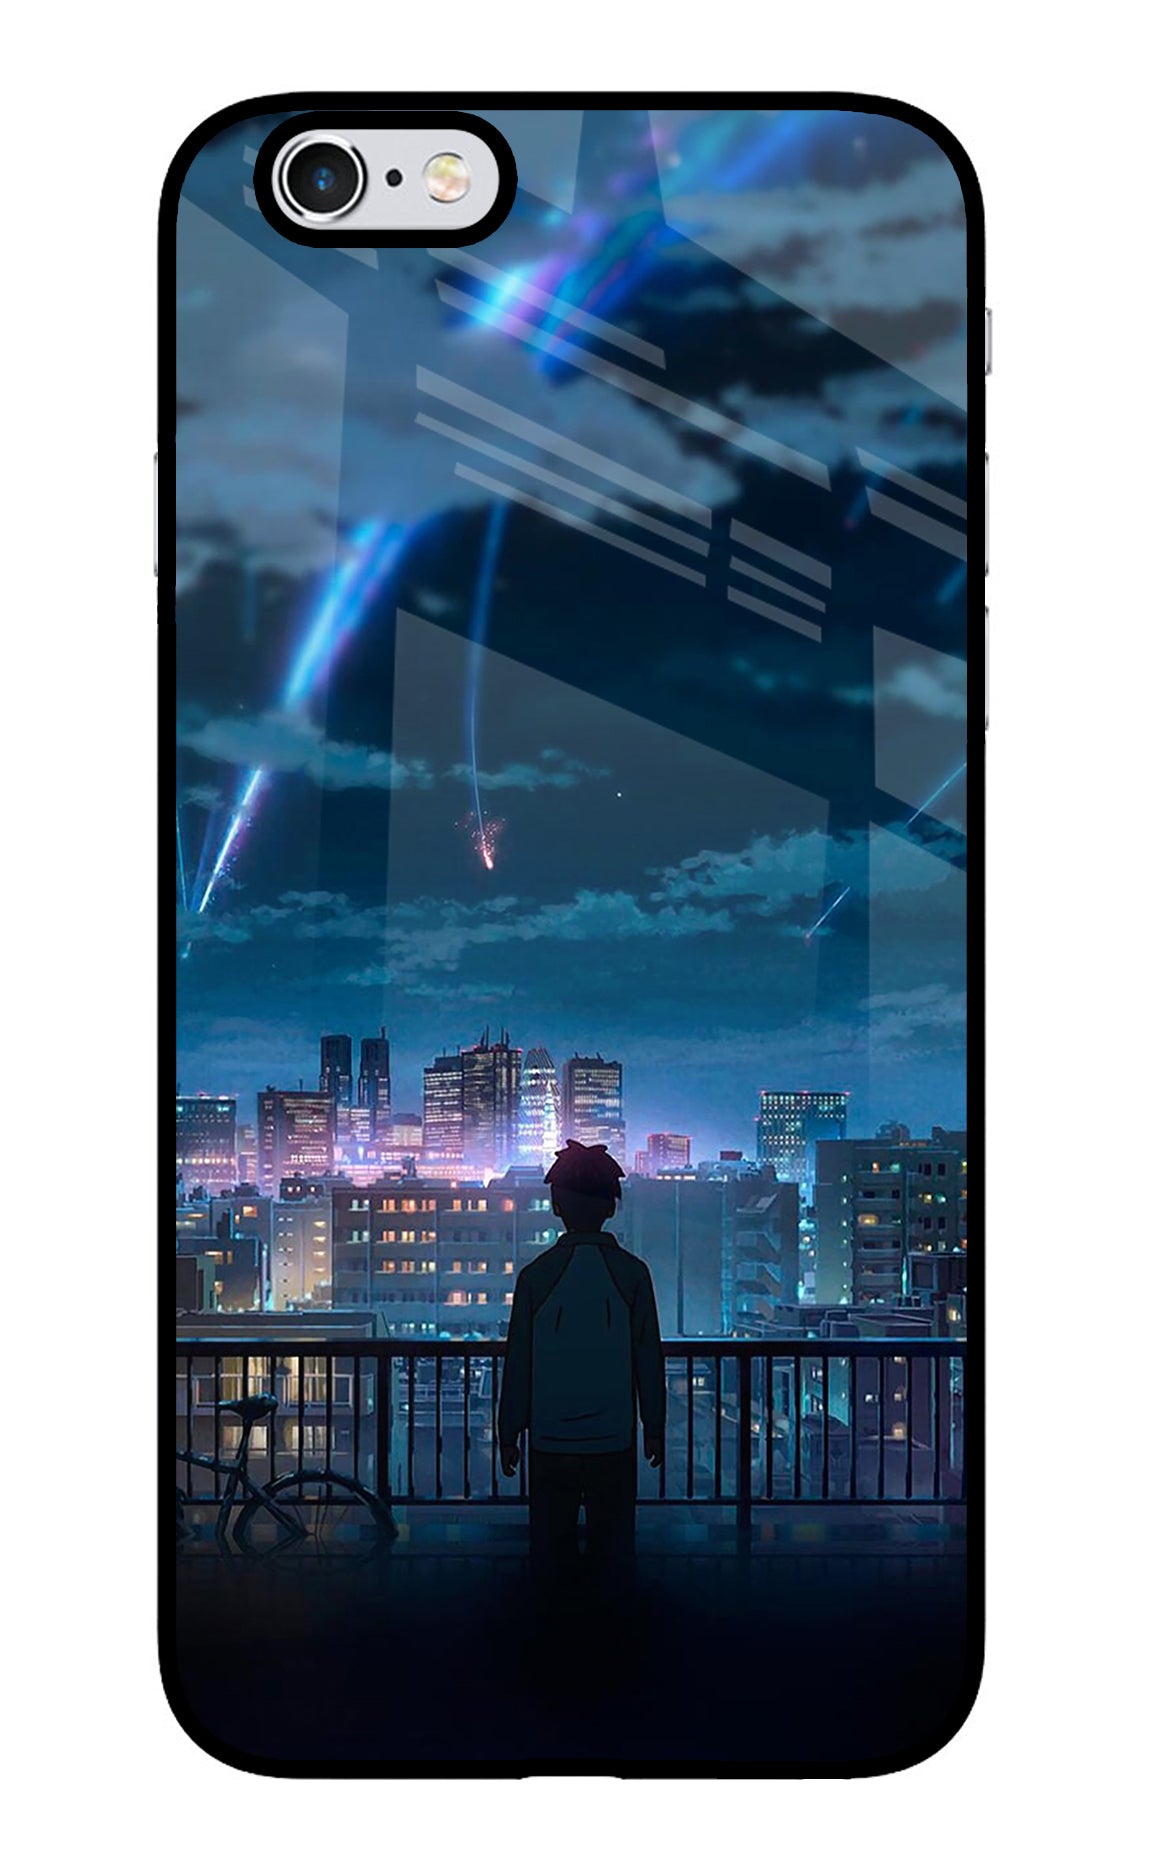 Anime iPhone 6 Plus/6s Plus Glass Case